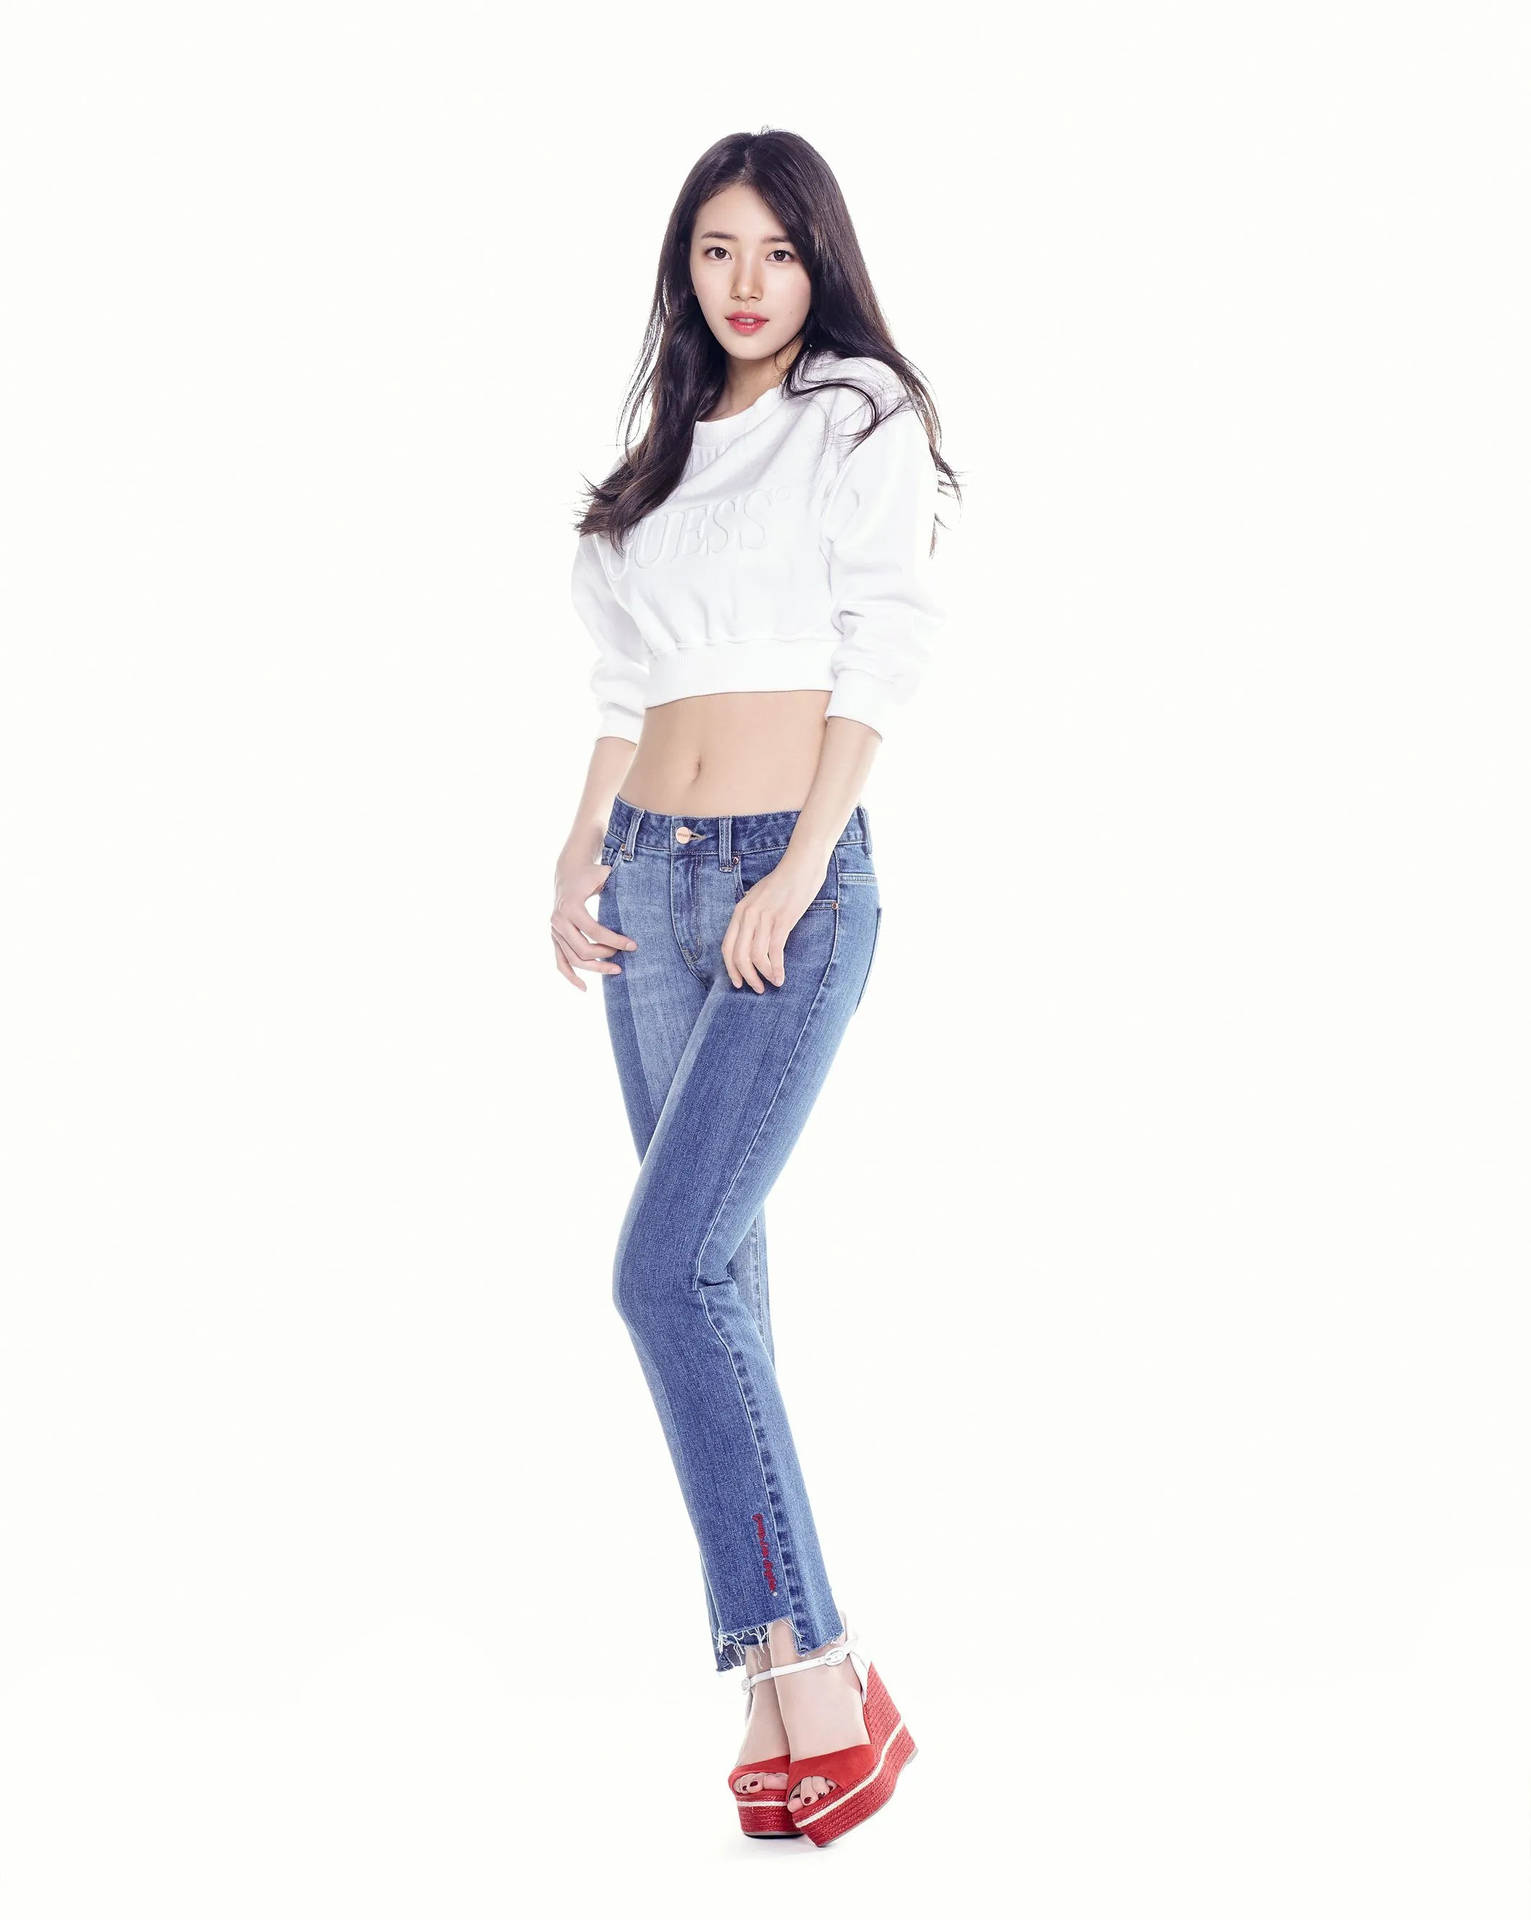 Bae Suzy Simple Brand Photoshoot Background